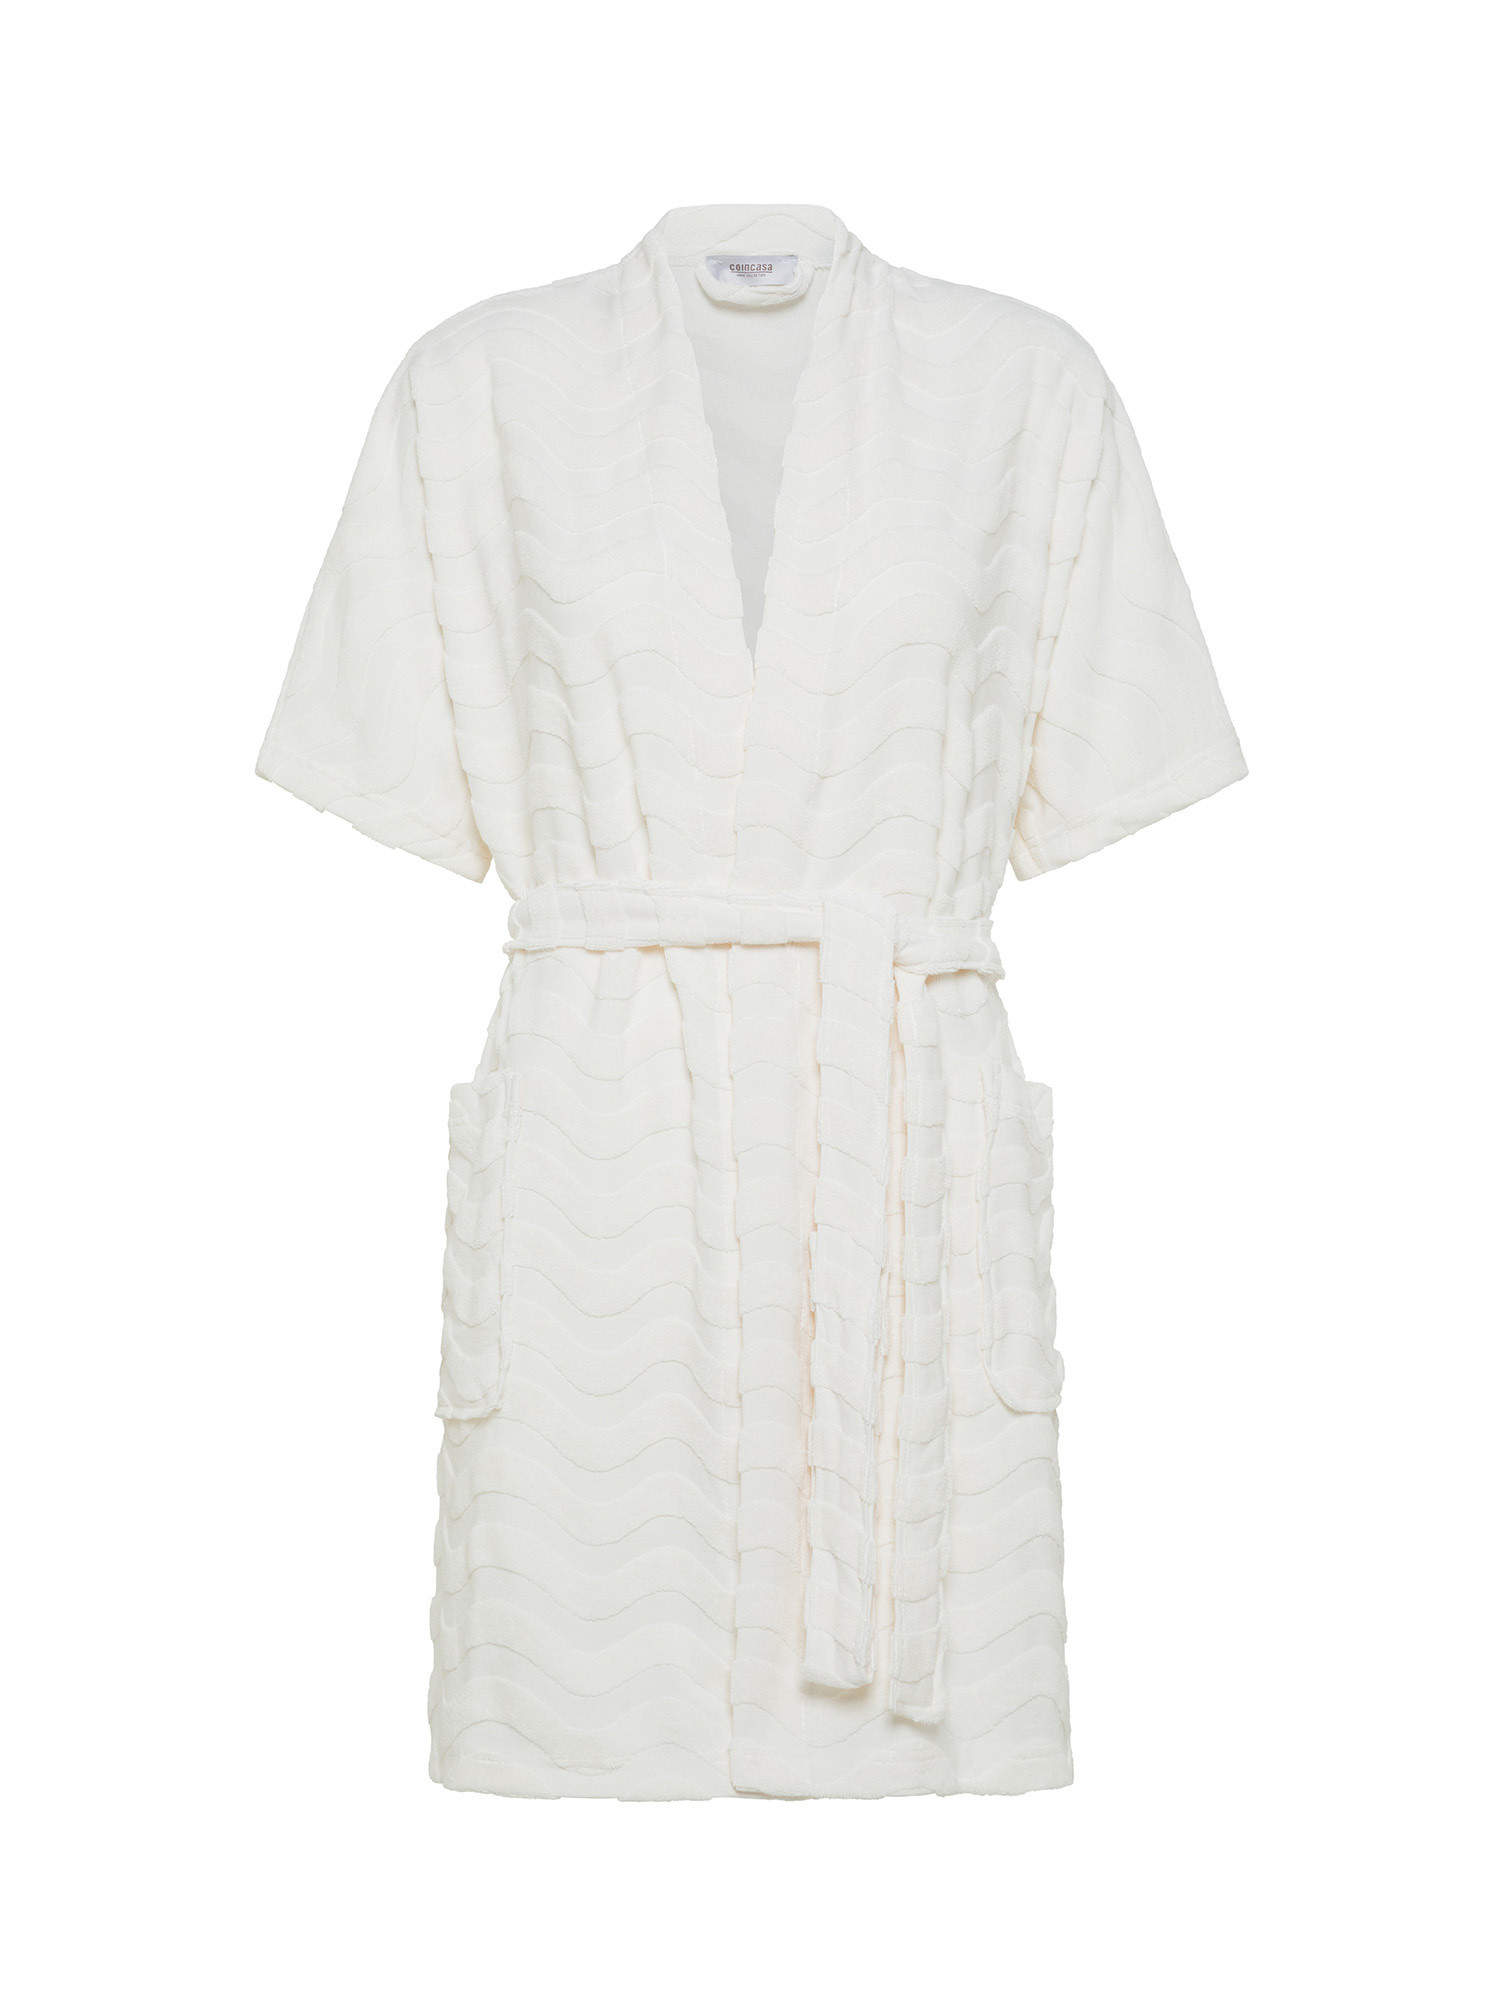 Jacquard knit kimono bathrobe, White Milk, large image number 0